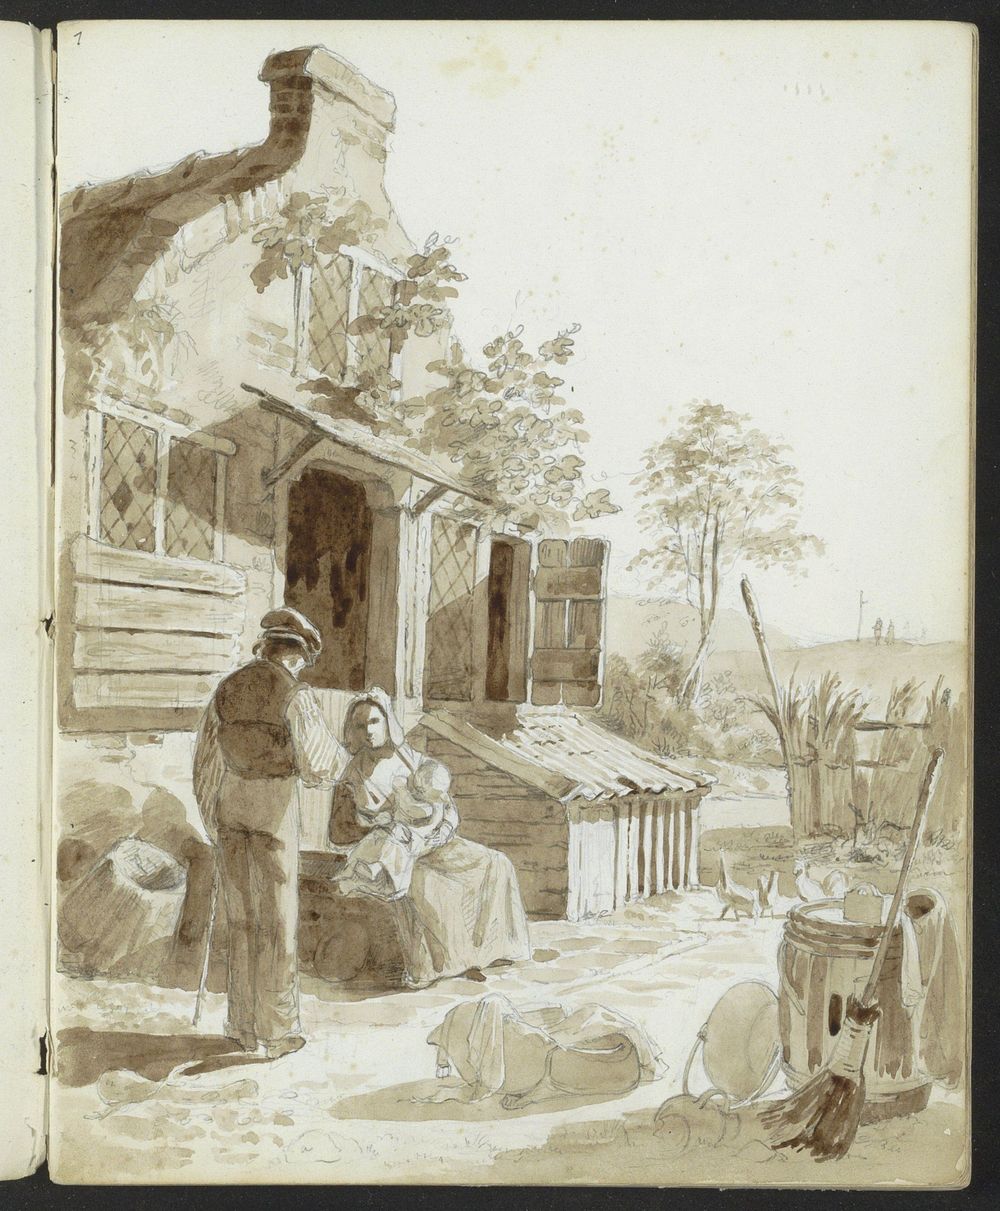 Man en vrouw met kind op een erf (1820 - 1872) by Hendrik Abraham Klinkhamer